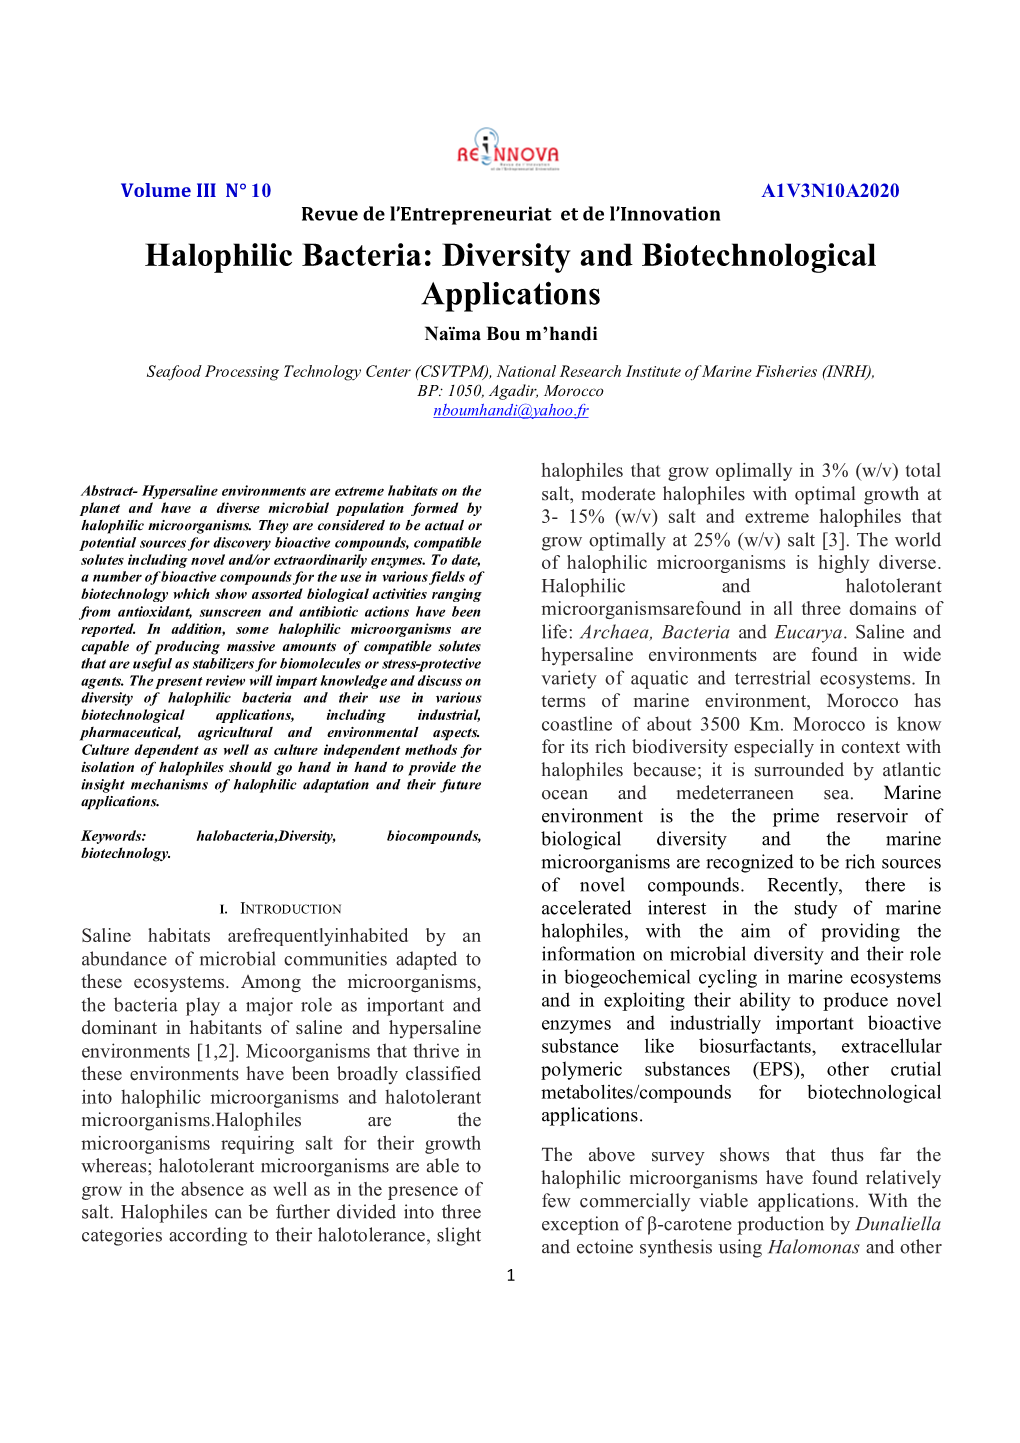 Halophilic Bacteria: Diversity and Biotechnological Applications Naïma Bou M’Handi